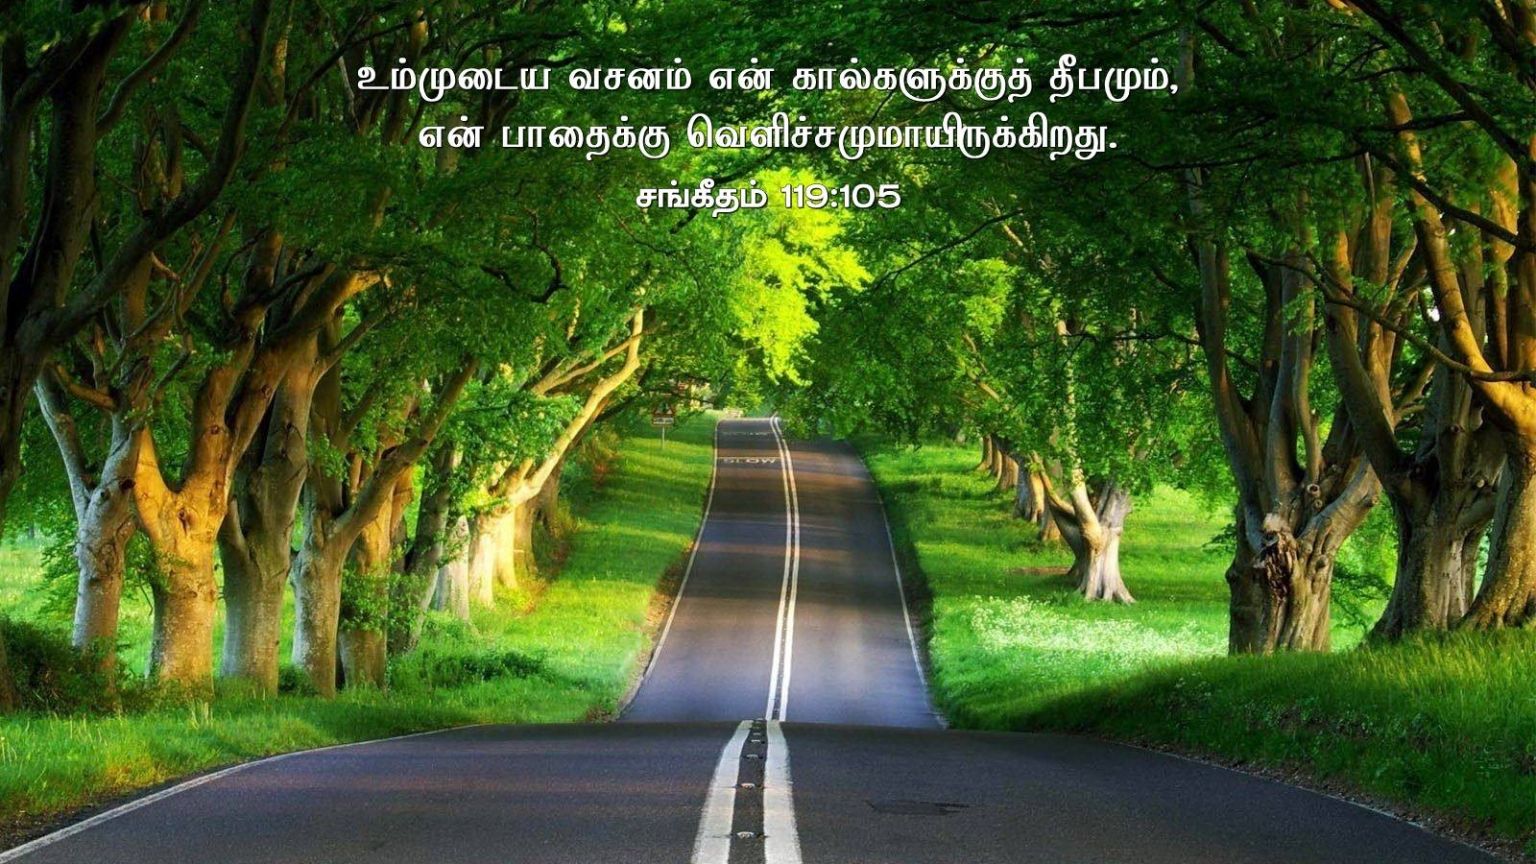 Free download Bible Quotes Tamil Bible Verse Wallpaper Tamil